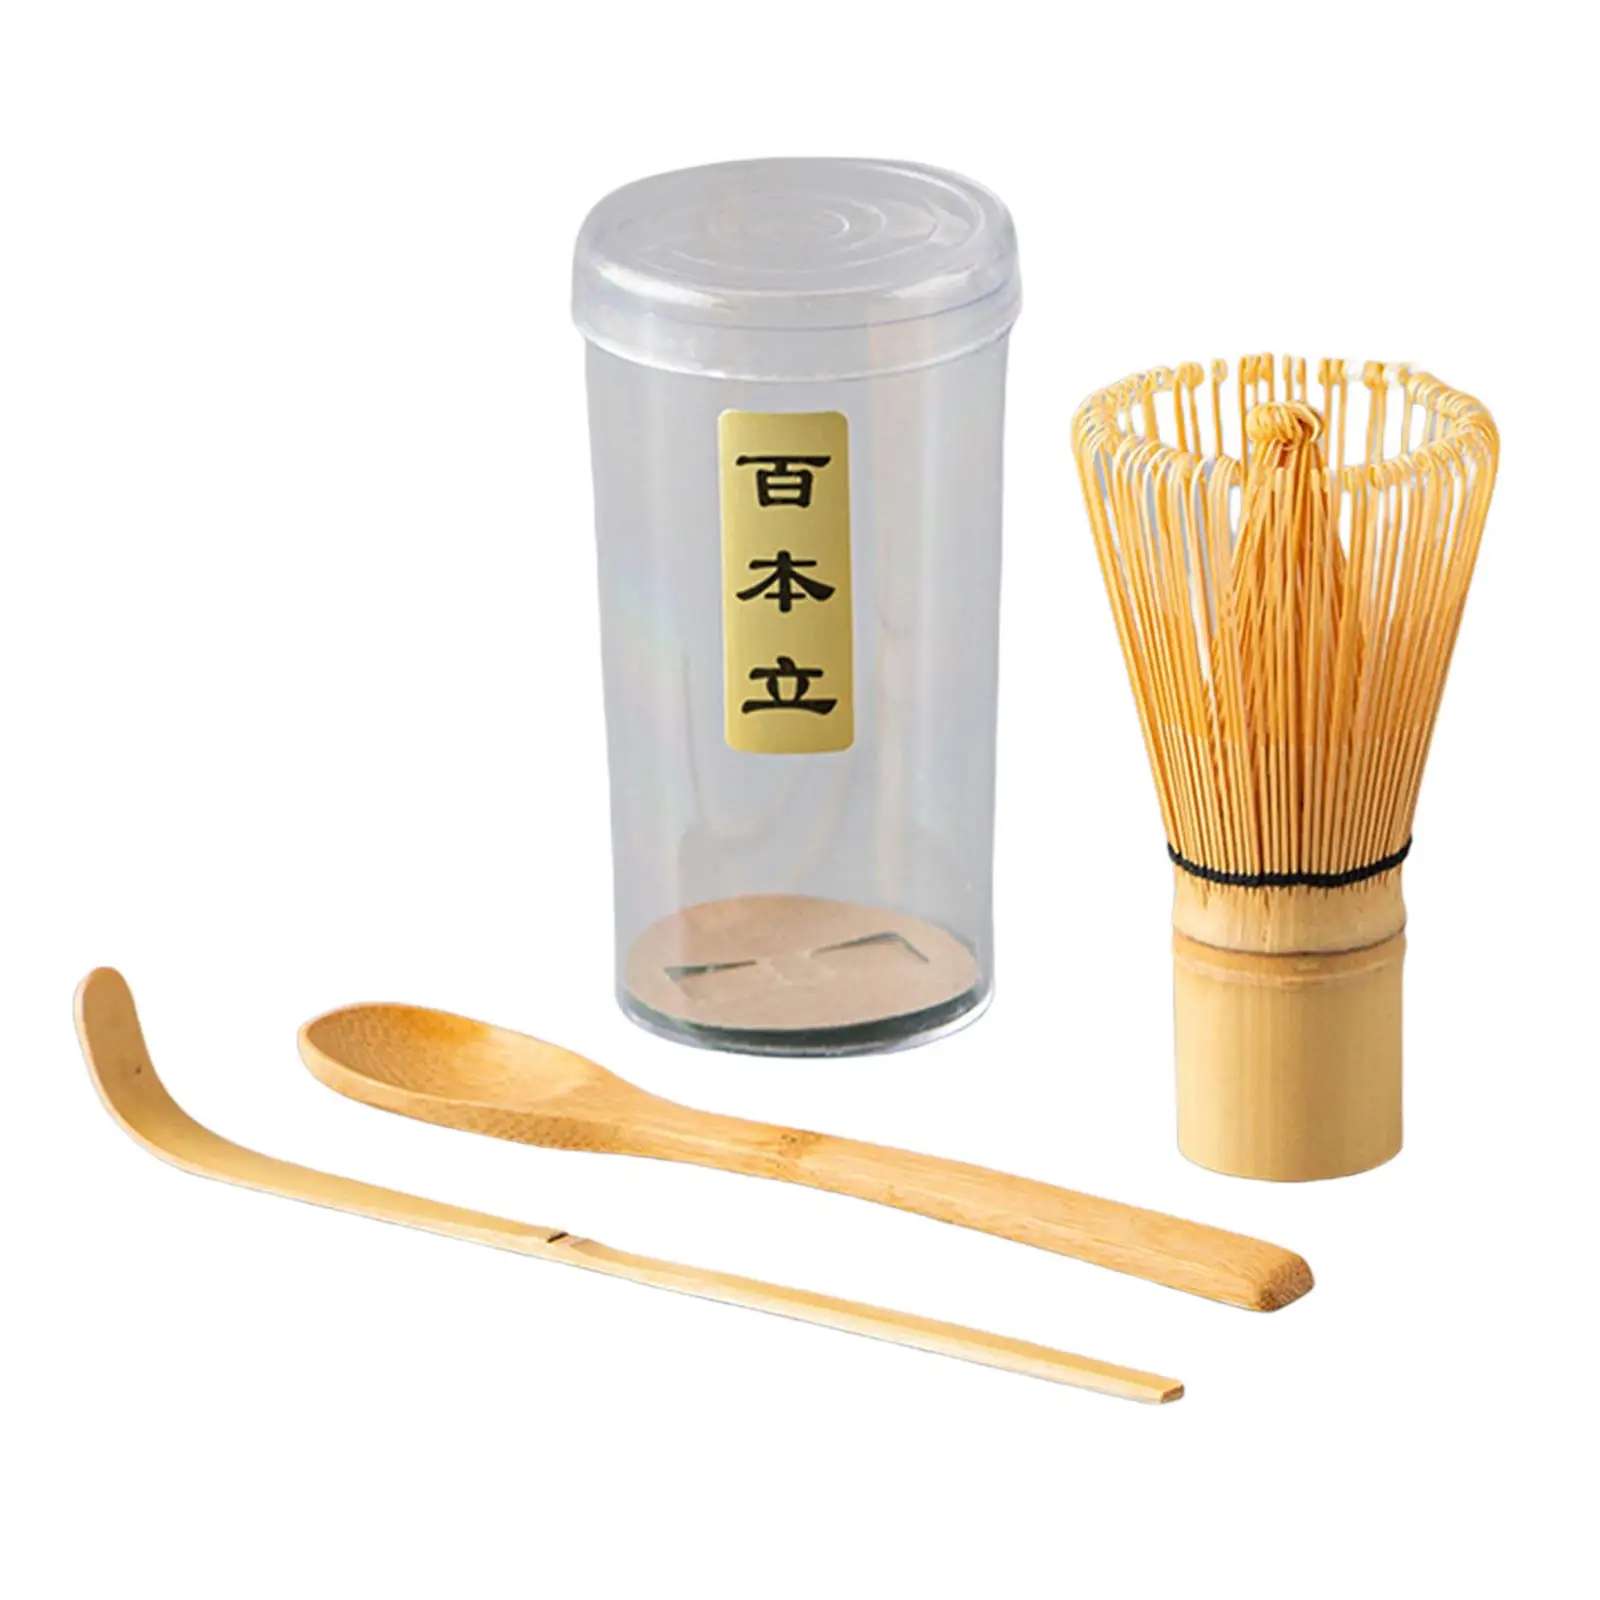 Bamboo Matcha Whisk Set Traditional , Tea Spoon Bamboo Whisk & Holder Matcha